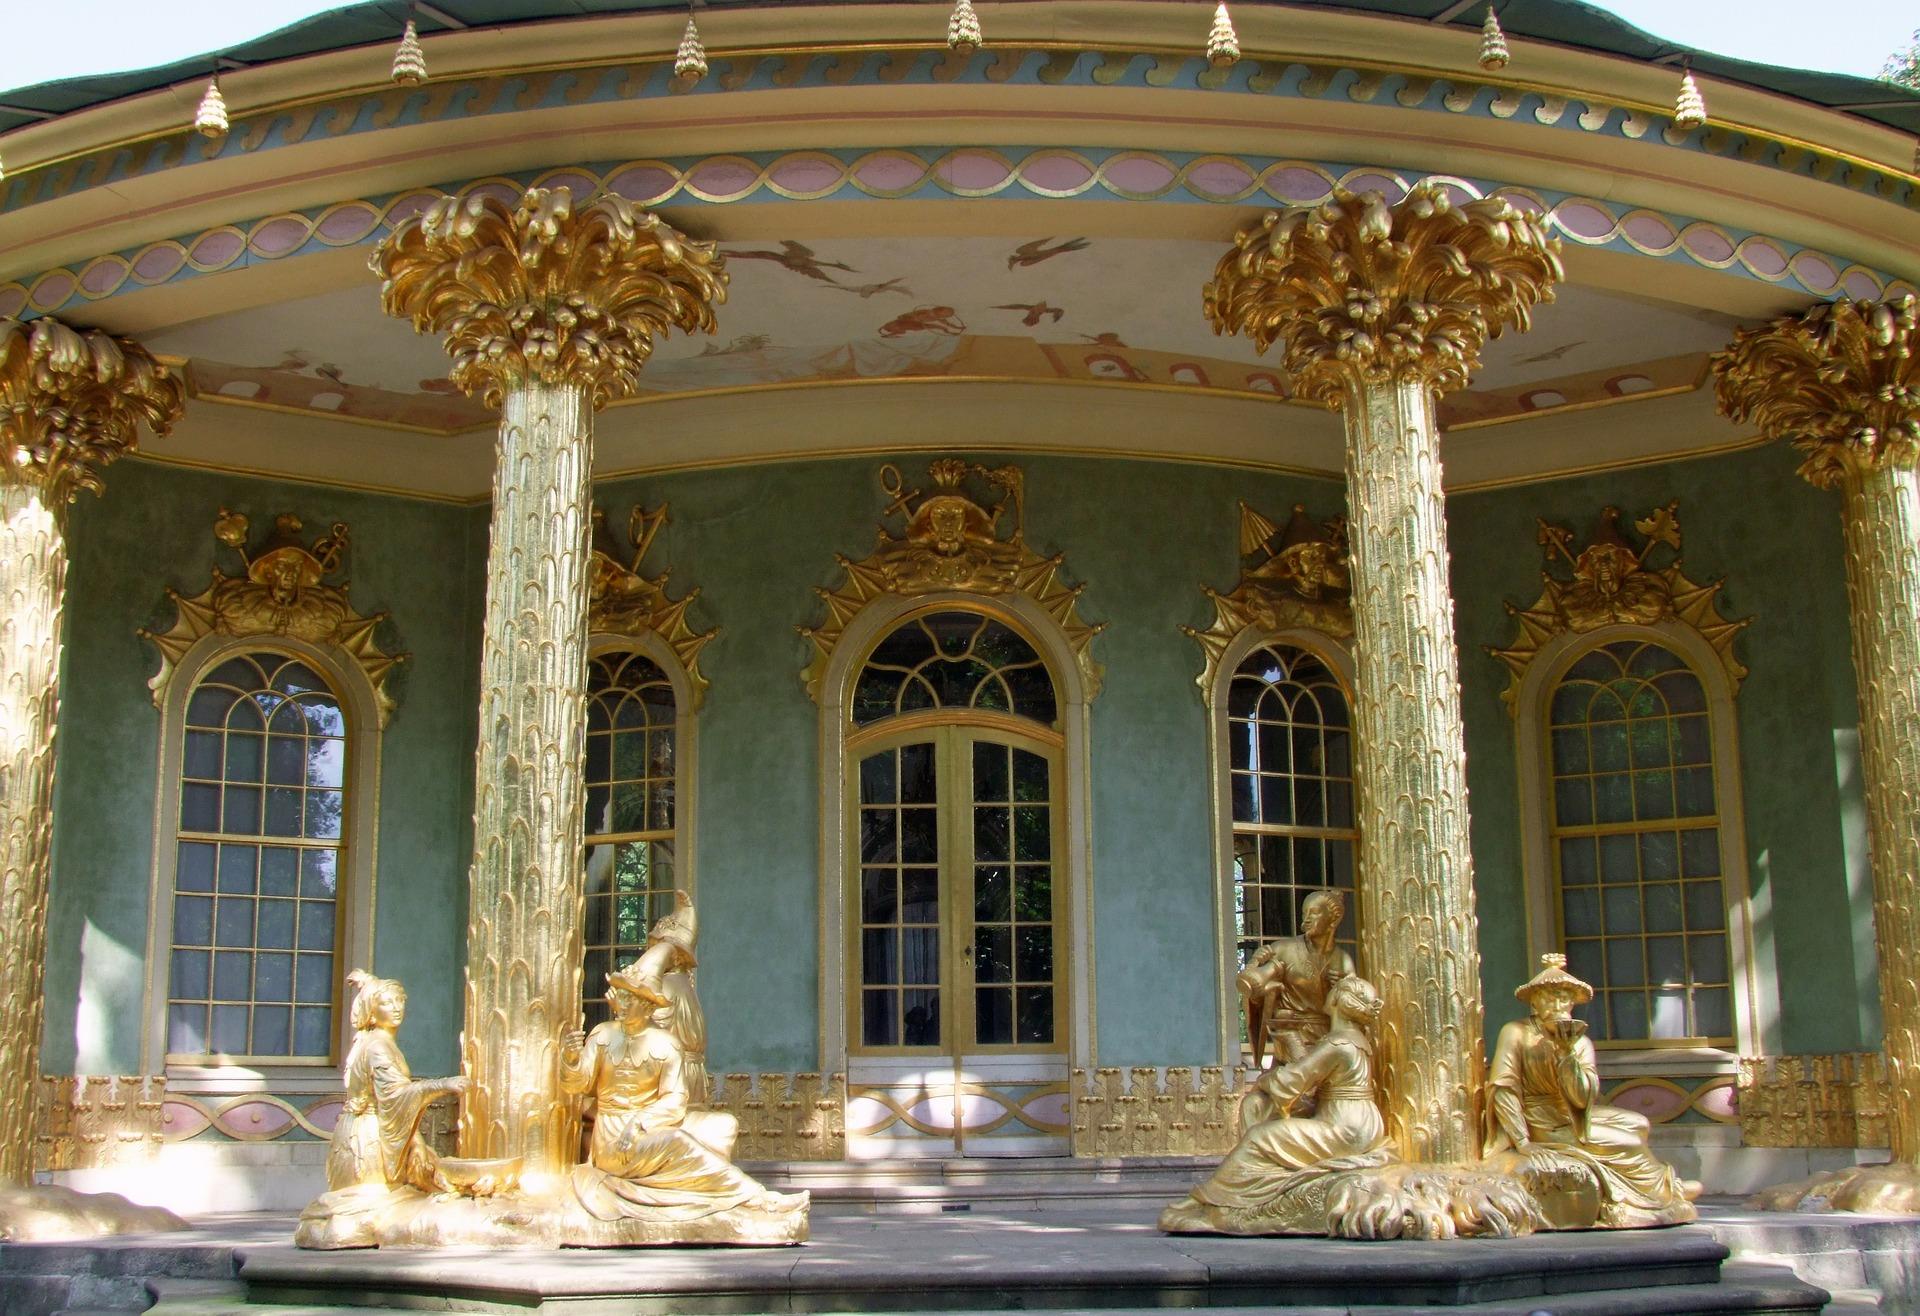 Free-tour-Potsdam:-the-city-of-Palaces-1